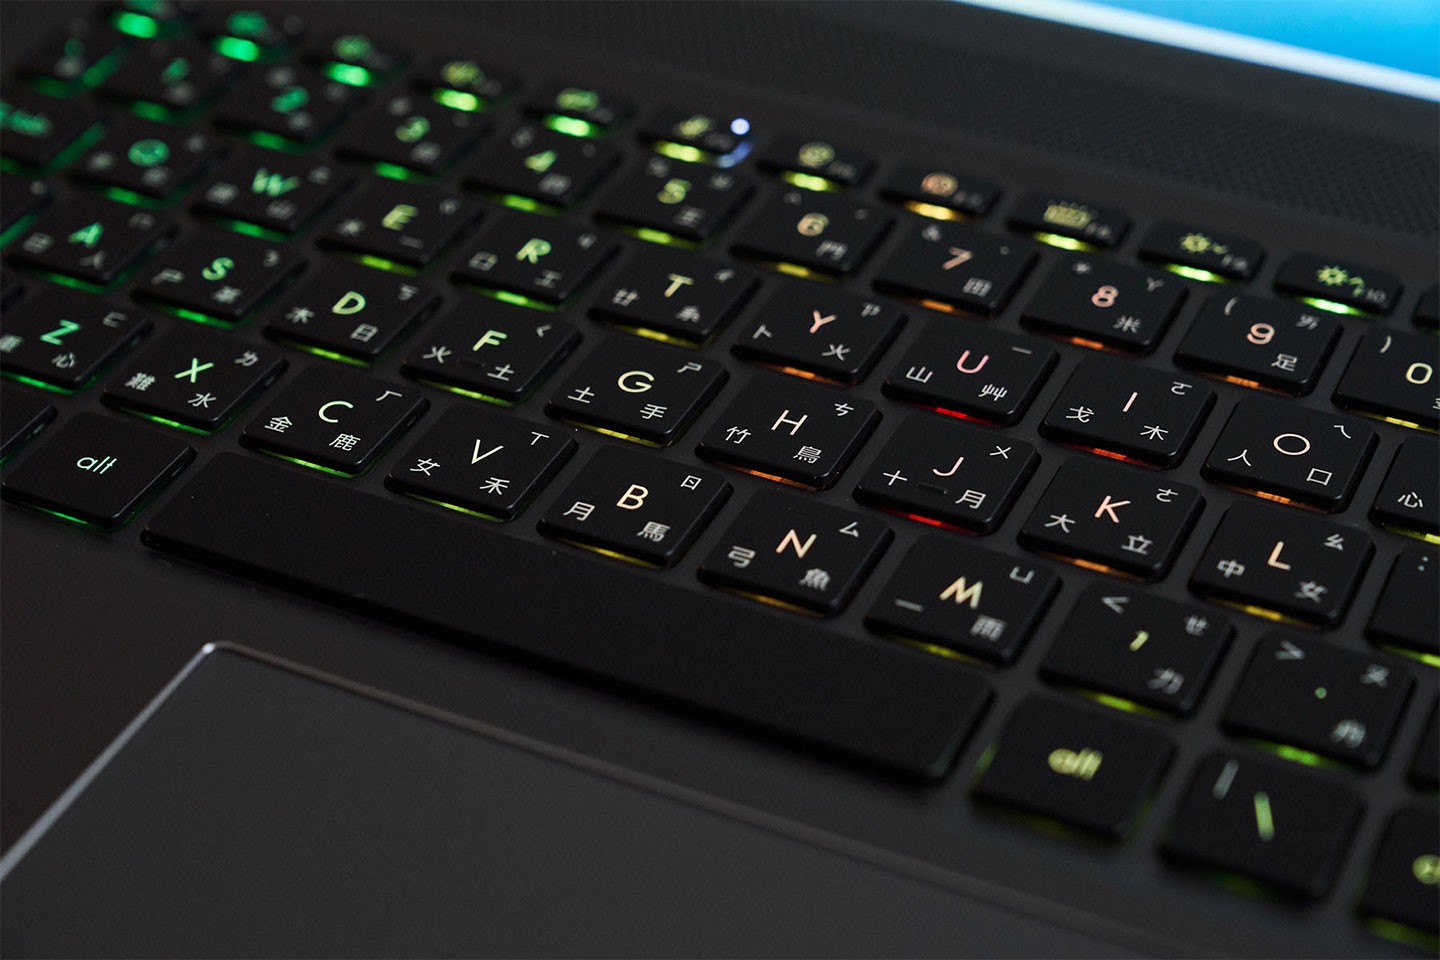 Creator Z16P 的鍵盤為單鍵 RGB 背光計，燈光效果不像電競電那麼炫目，明亮且均勻的背光呈現也是整體內斂計下的一個小亮點。